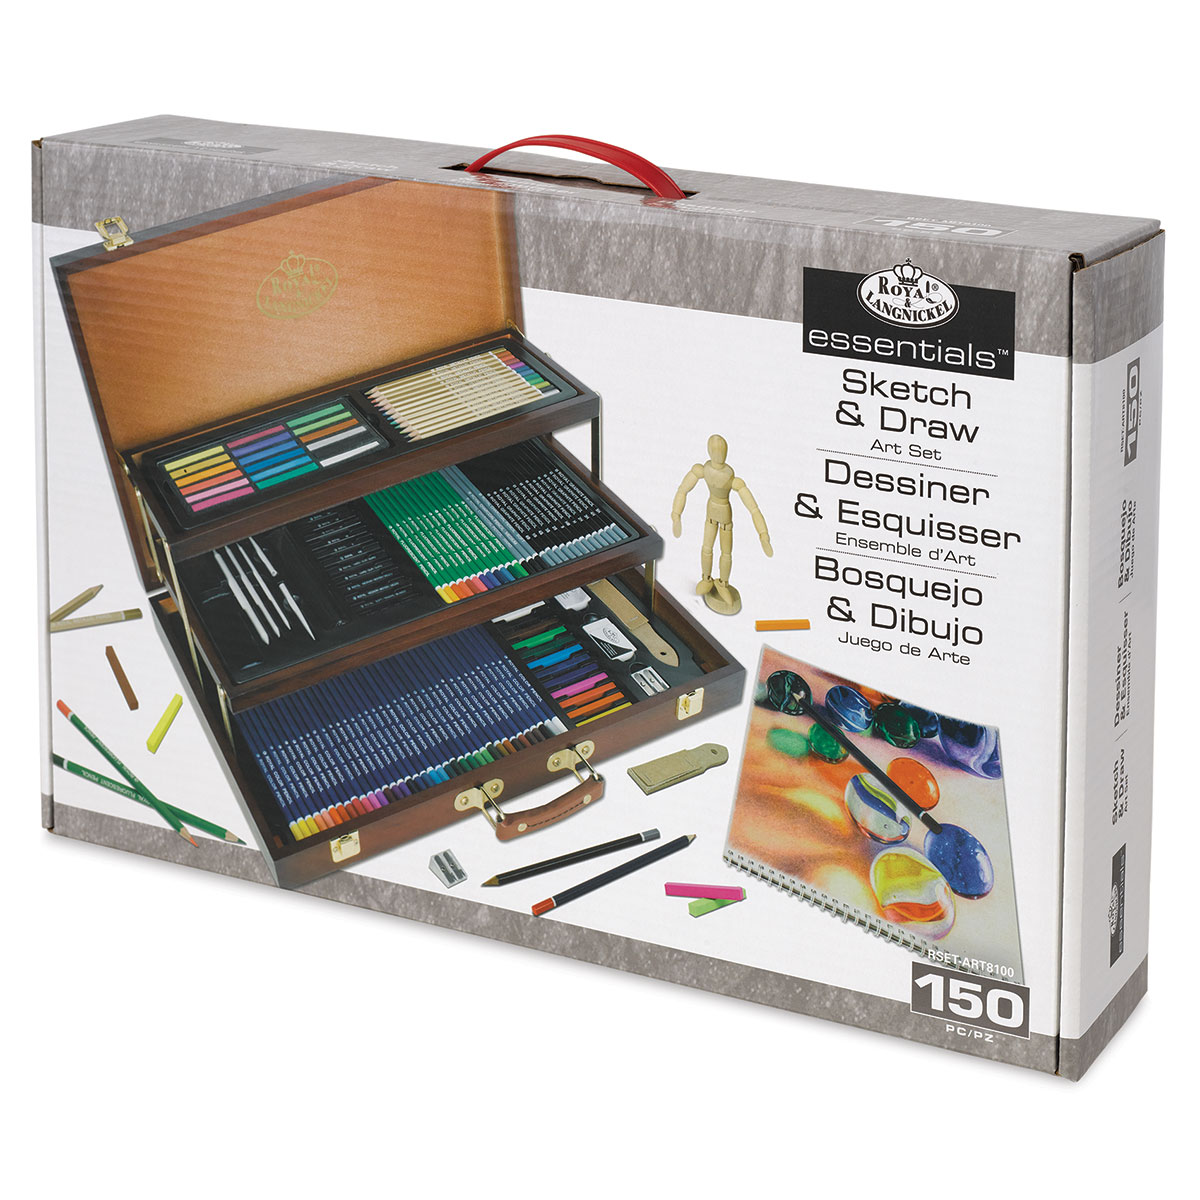 Royal & Langnickel Essentials Sketching Art Set 2408 | 50,000+ Art Supplies  | Your Art Superstore